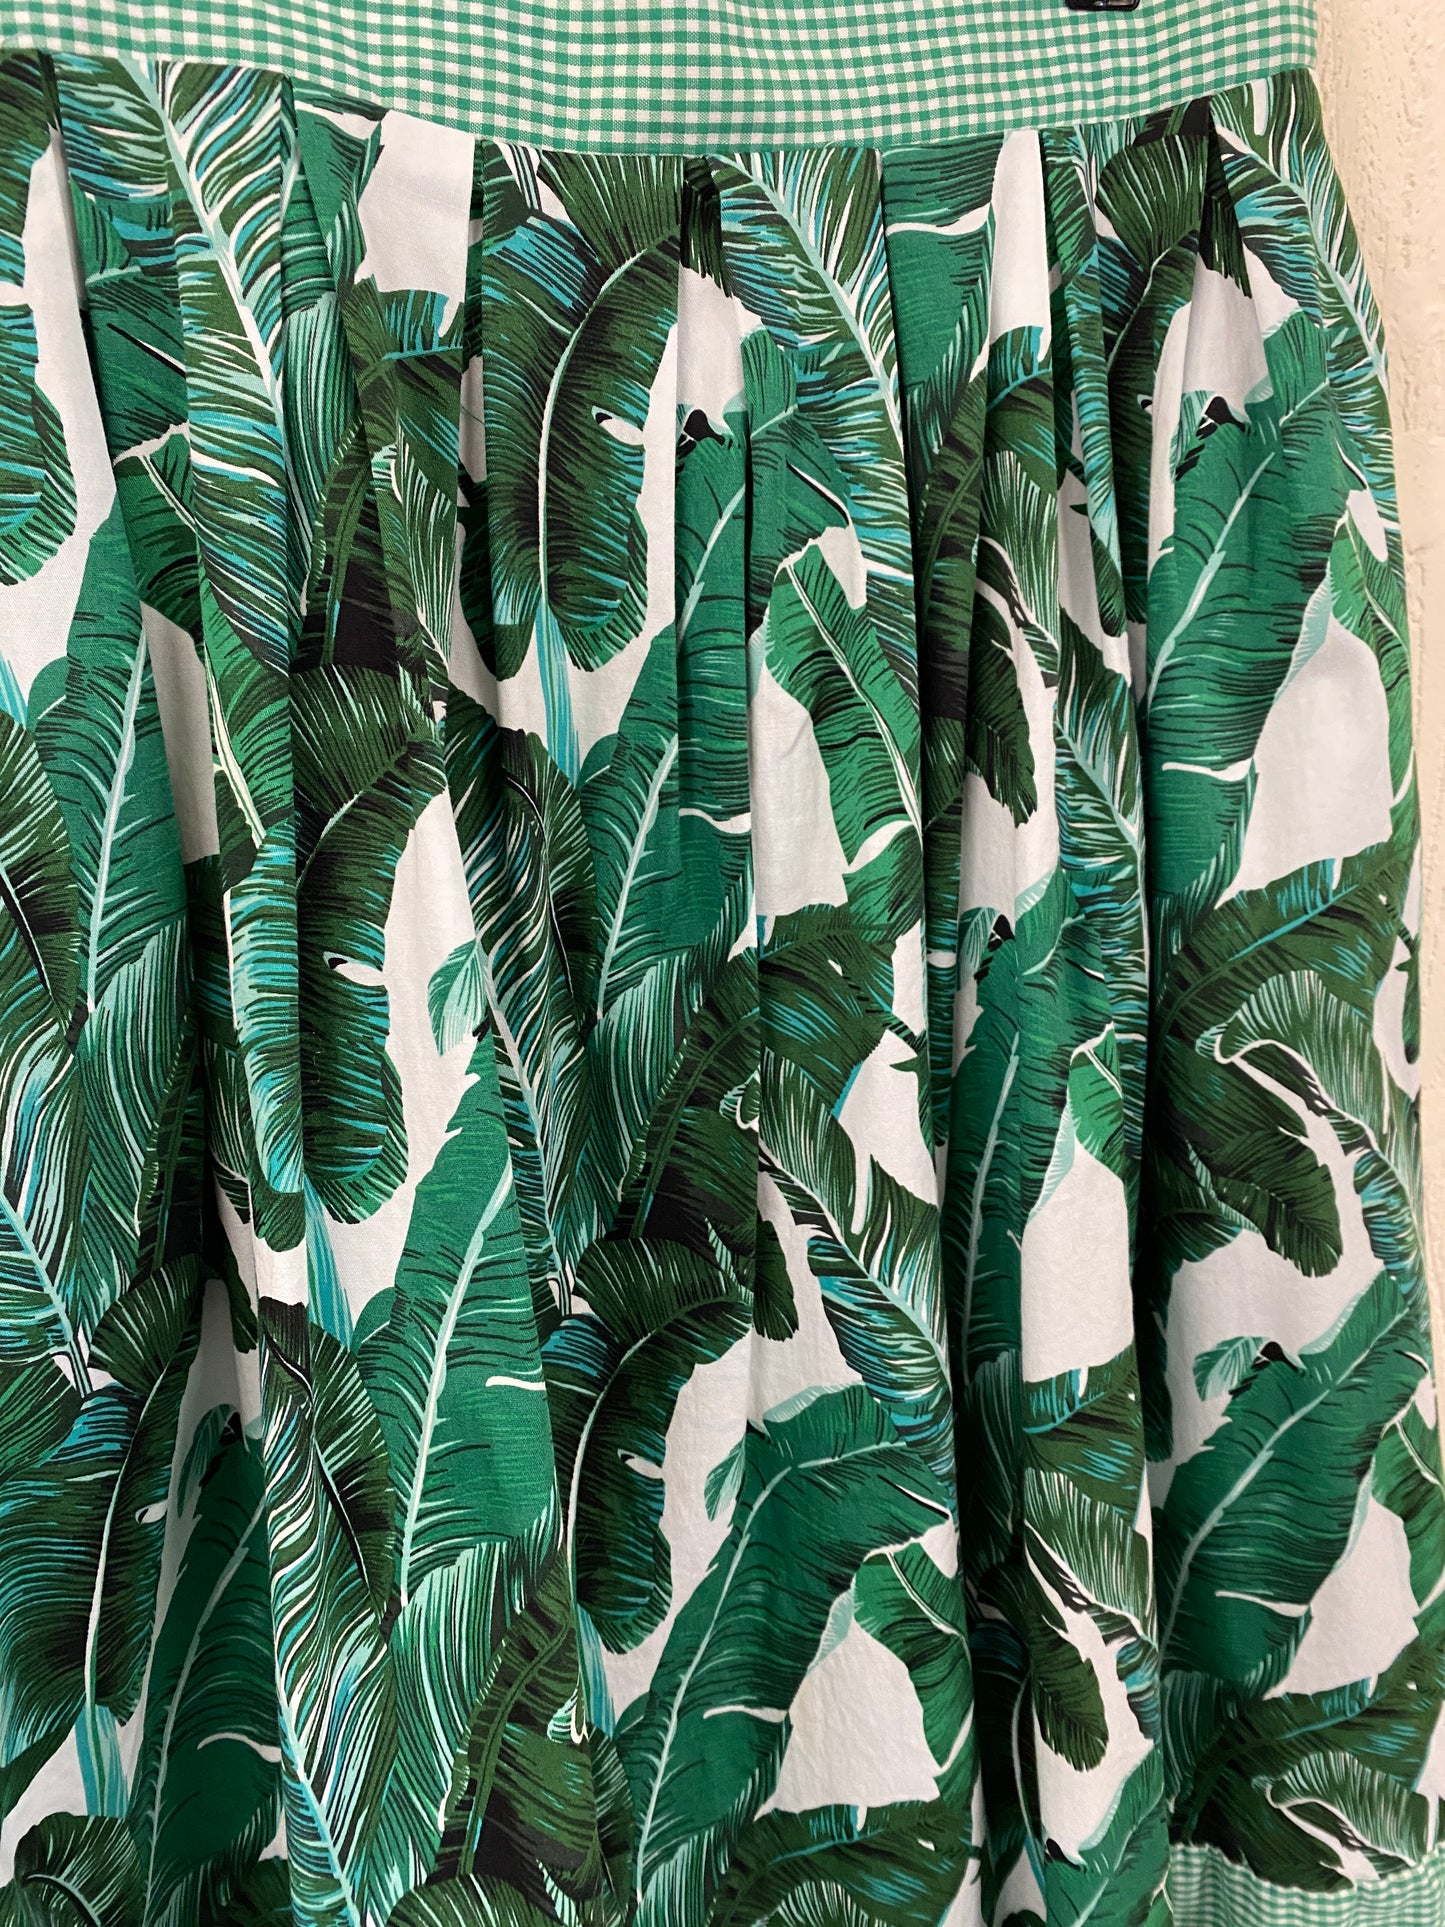 Hand Made Gingham and Palm Print Skirt 8-10